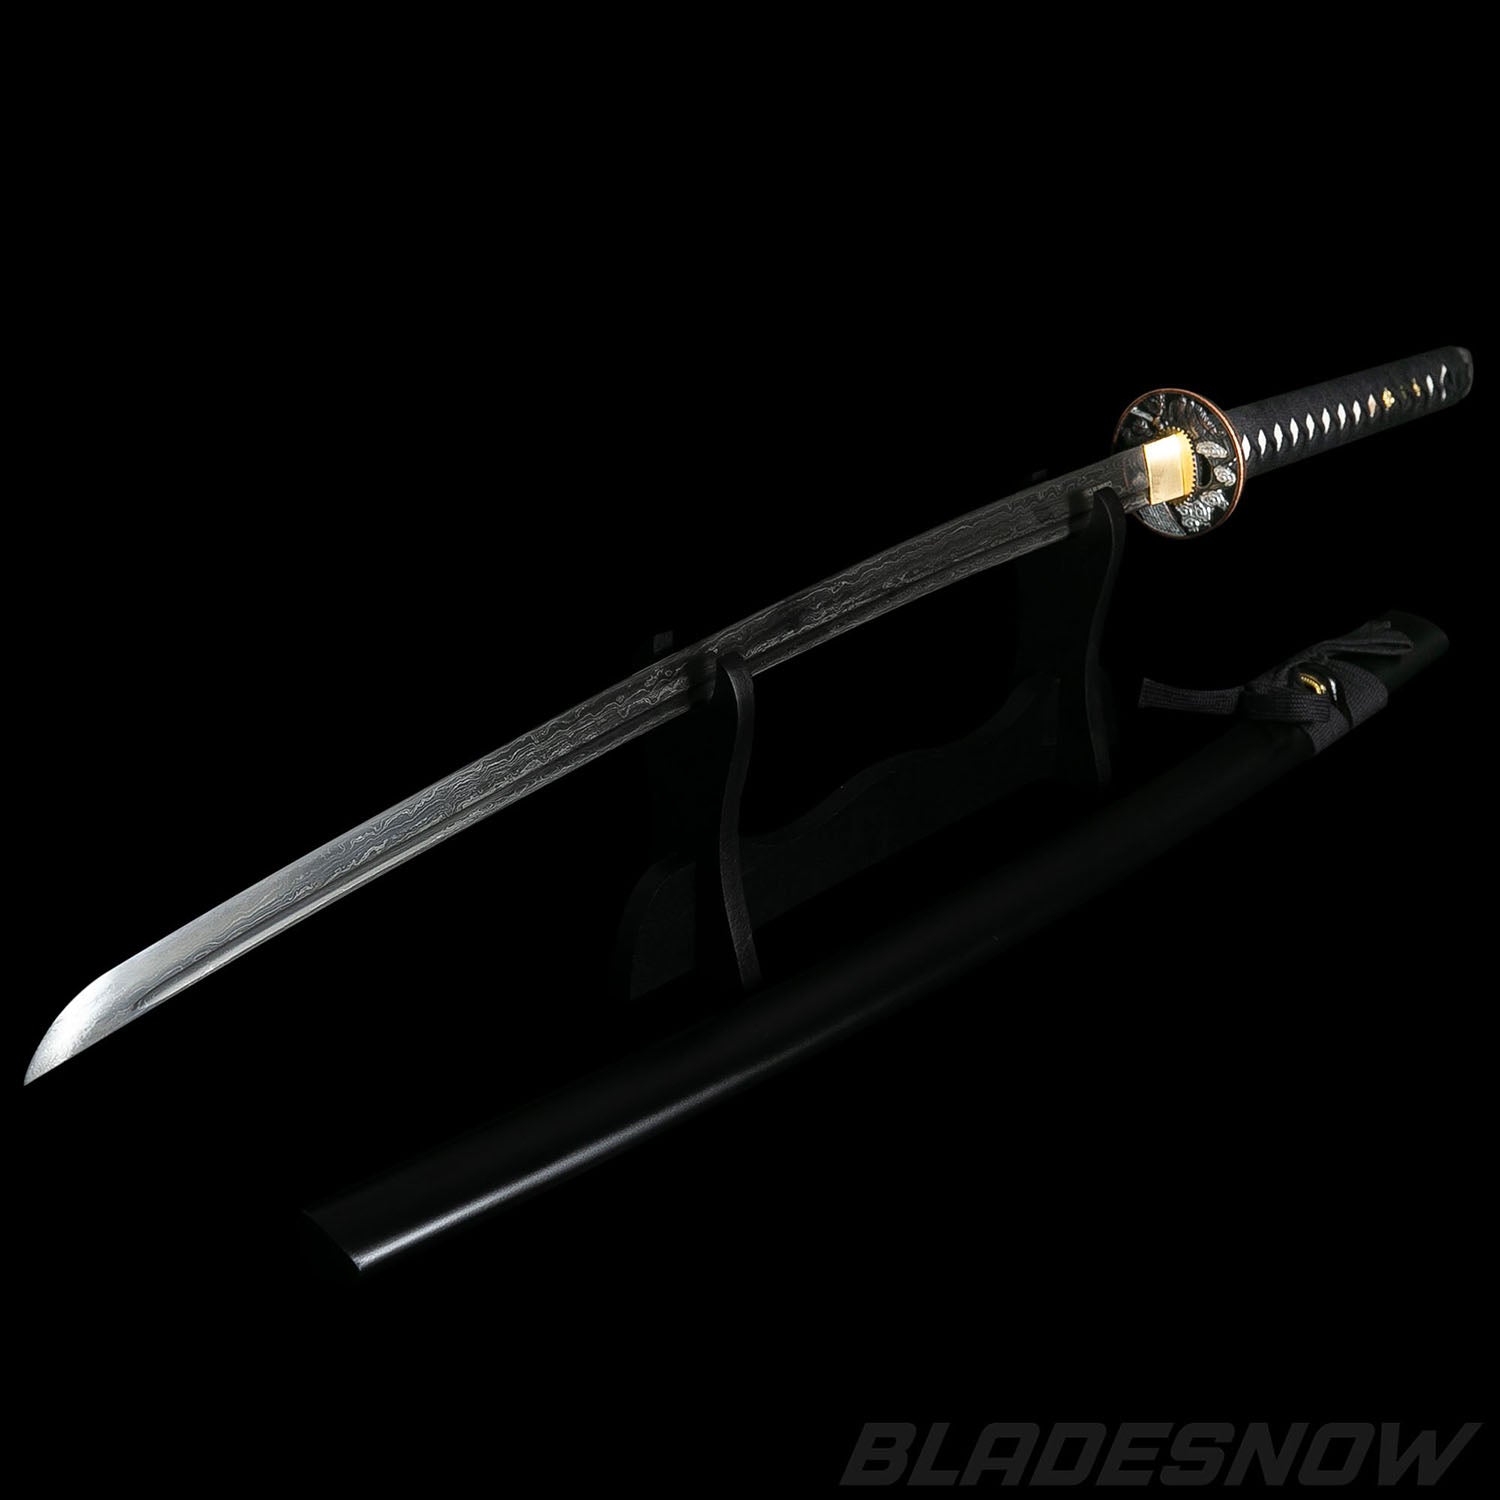 41" Battle Ready Katana Damascus Sword - Bladesnow